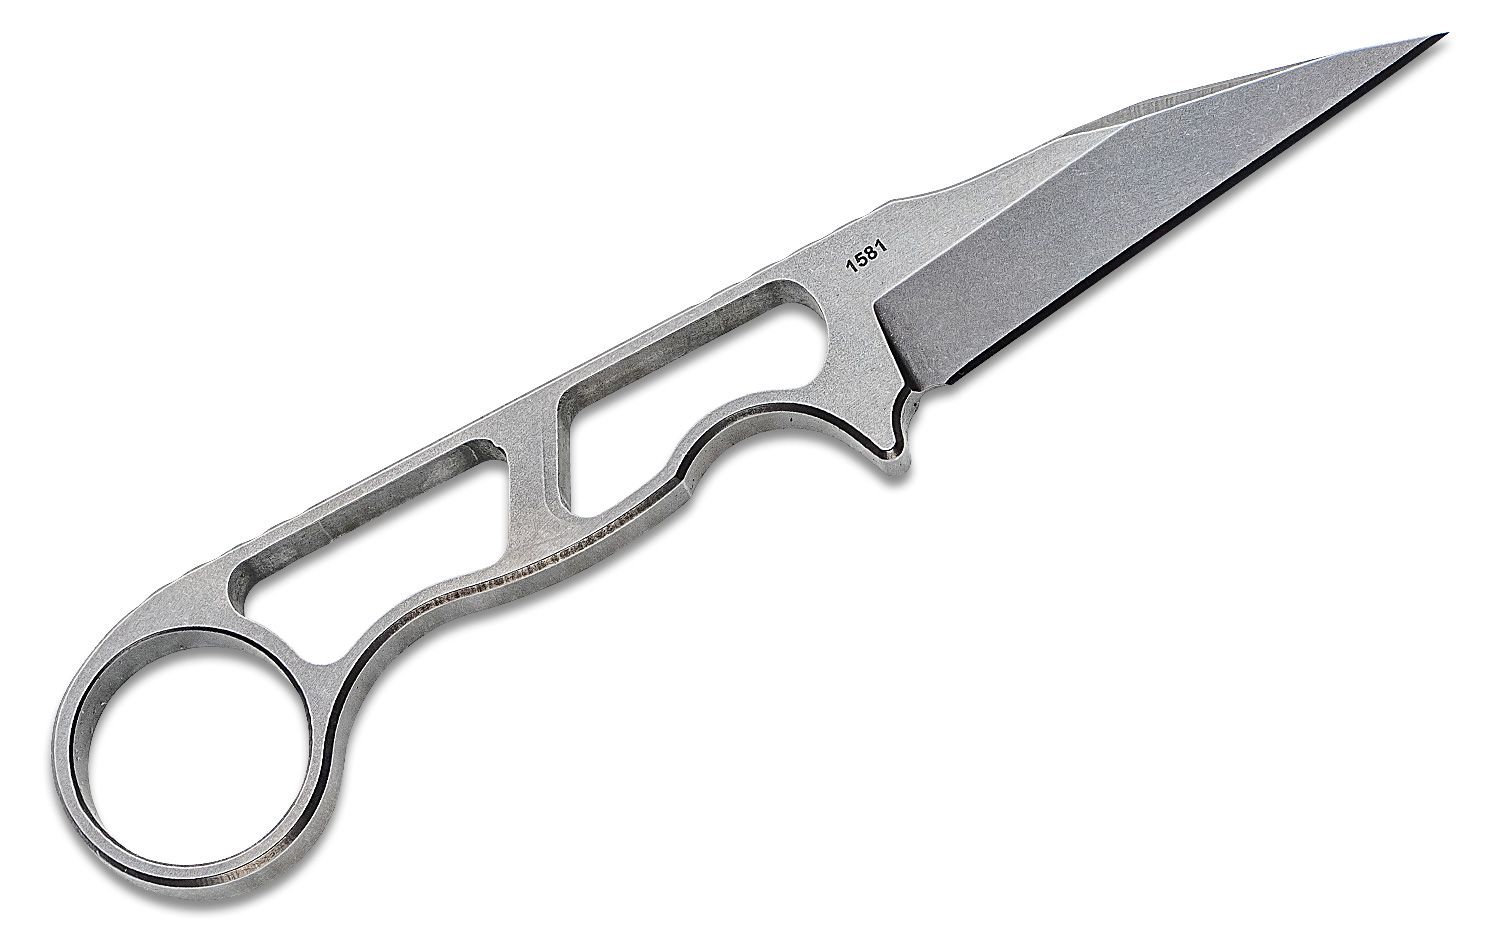 Toor Knives Jank Shank Fixed Blade Knife